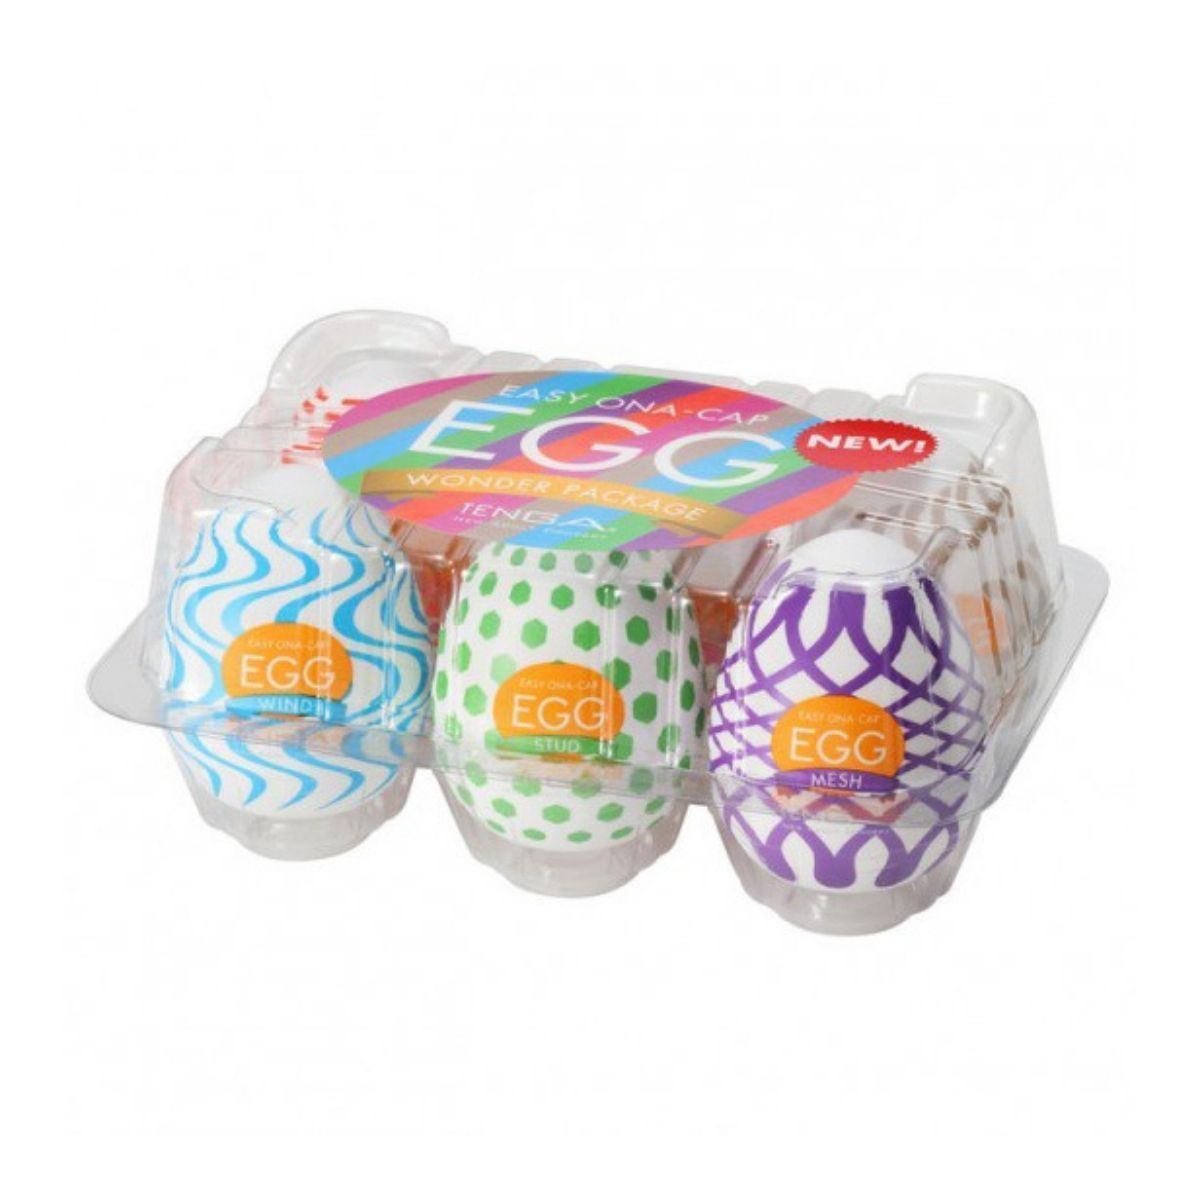 TENGA Tenga Egg Wonder Package 飛機蛋套裝 飛機蛋 購買